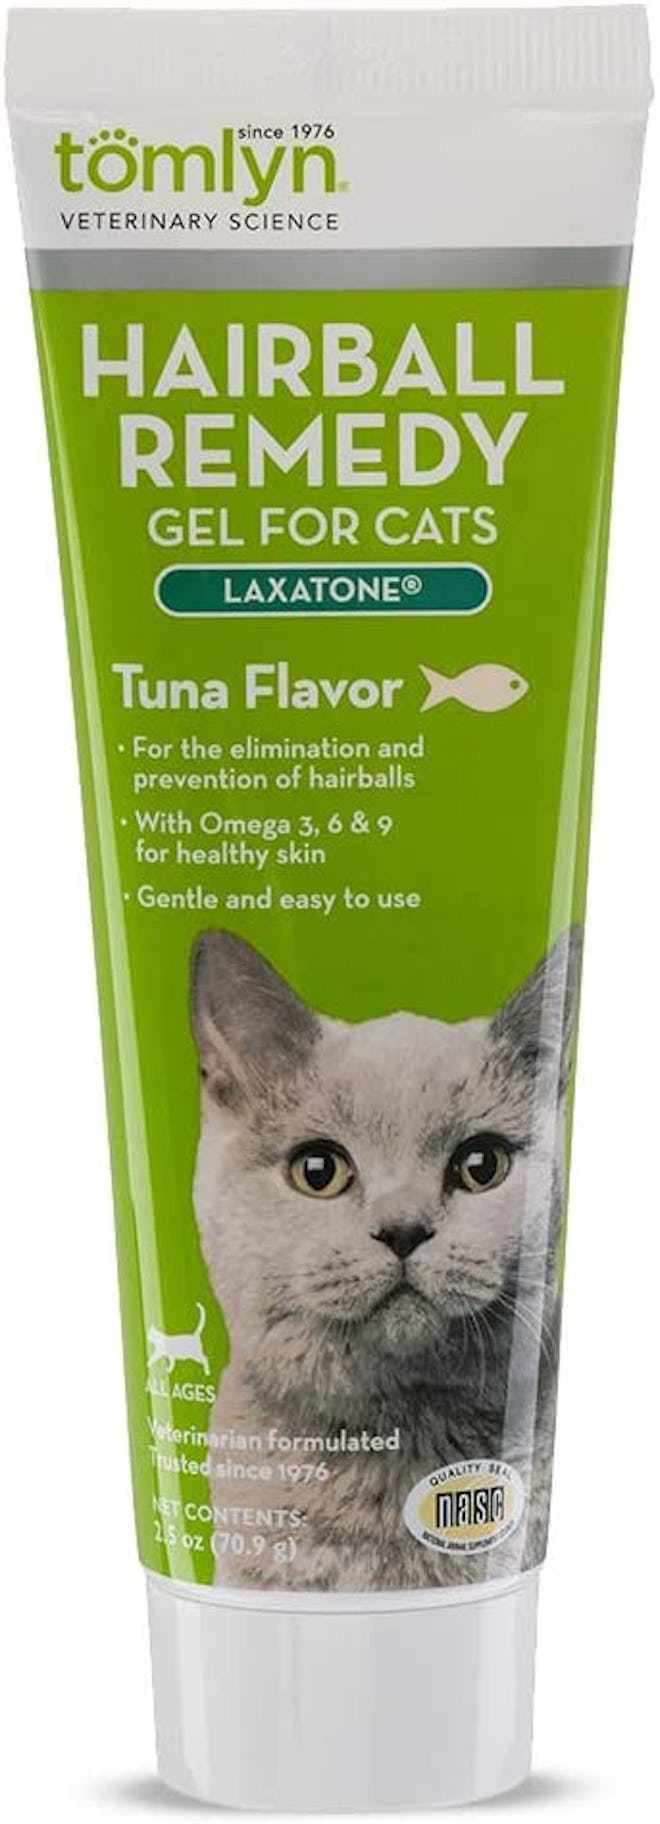 TOMLYN Laxatone Tuna-Flavored Hairball Remedy Gel